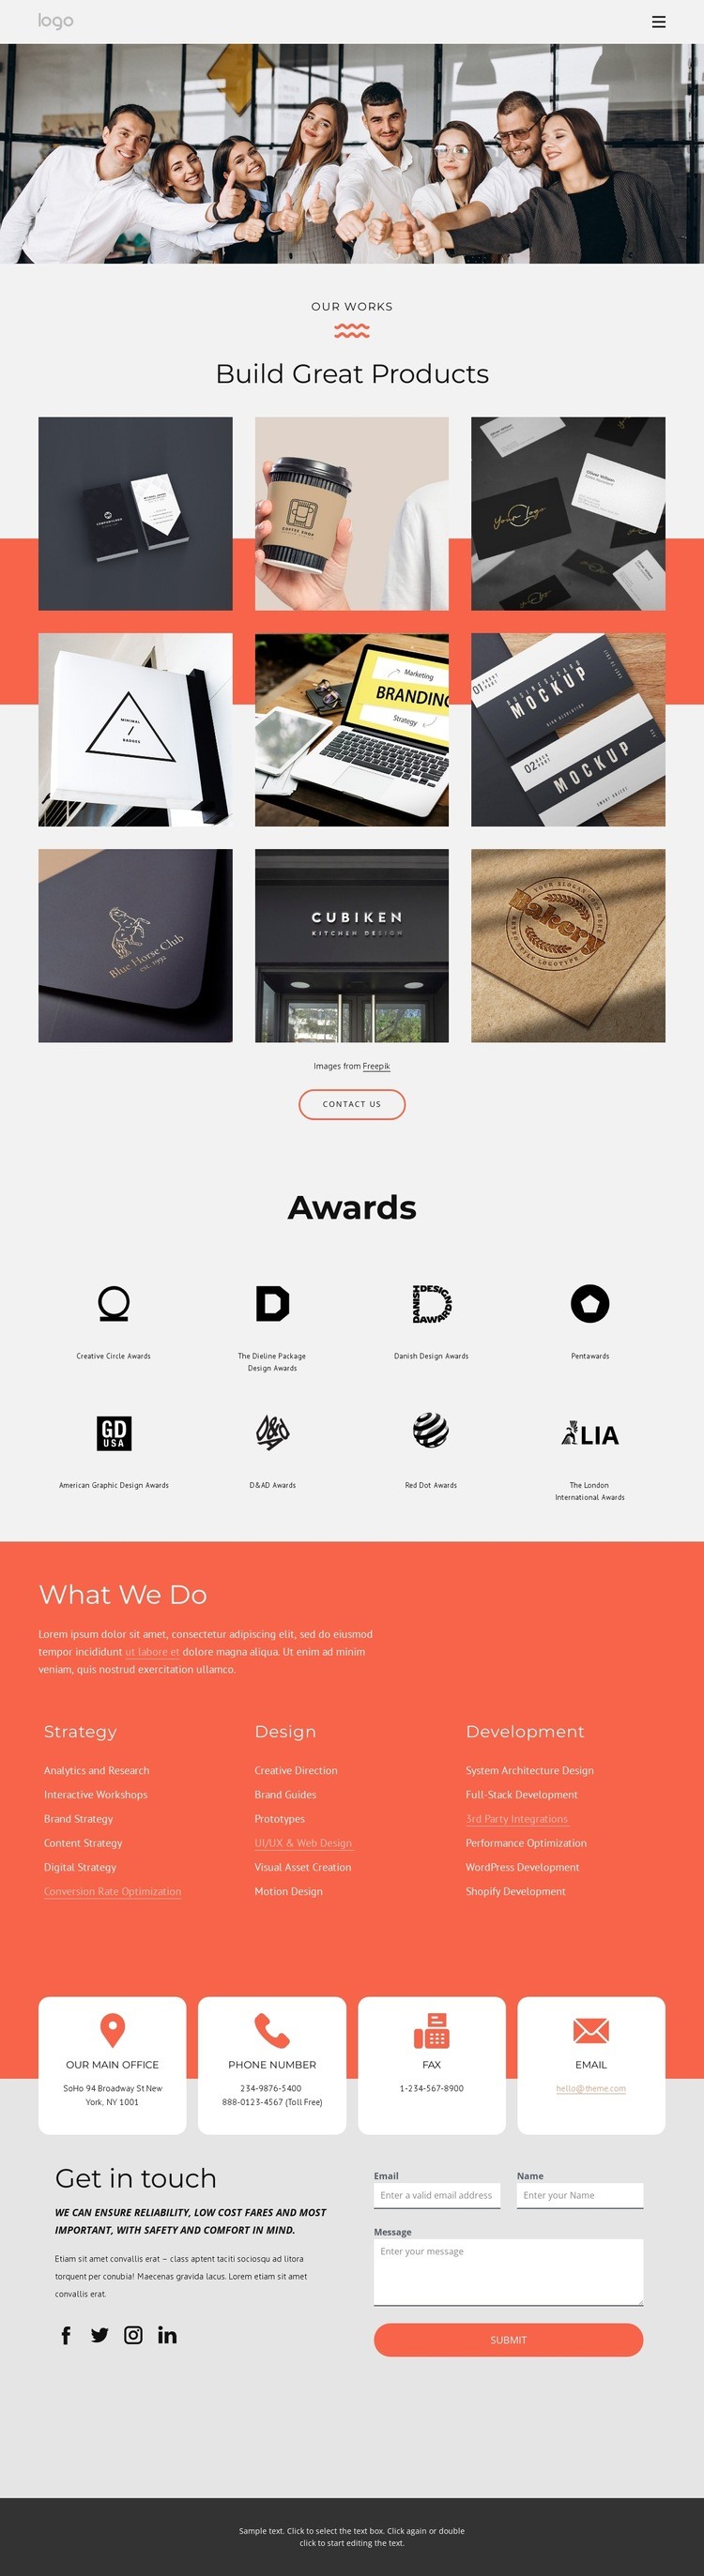 Award winning branding services Web Page Design